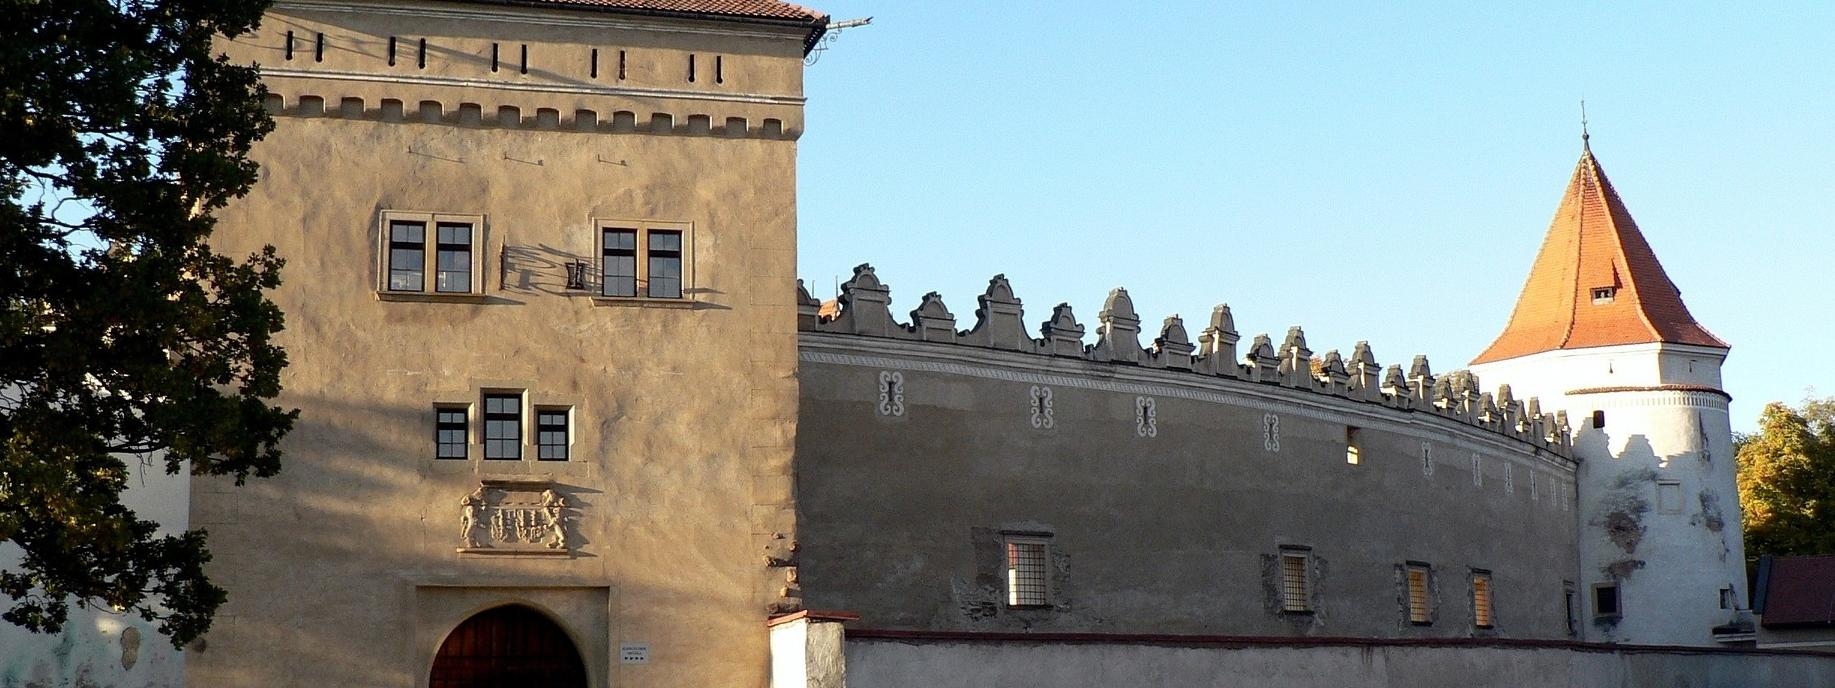 Kežmarok castle - Kežmarok - Slovakia